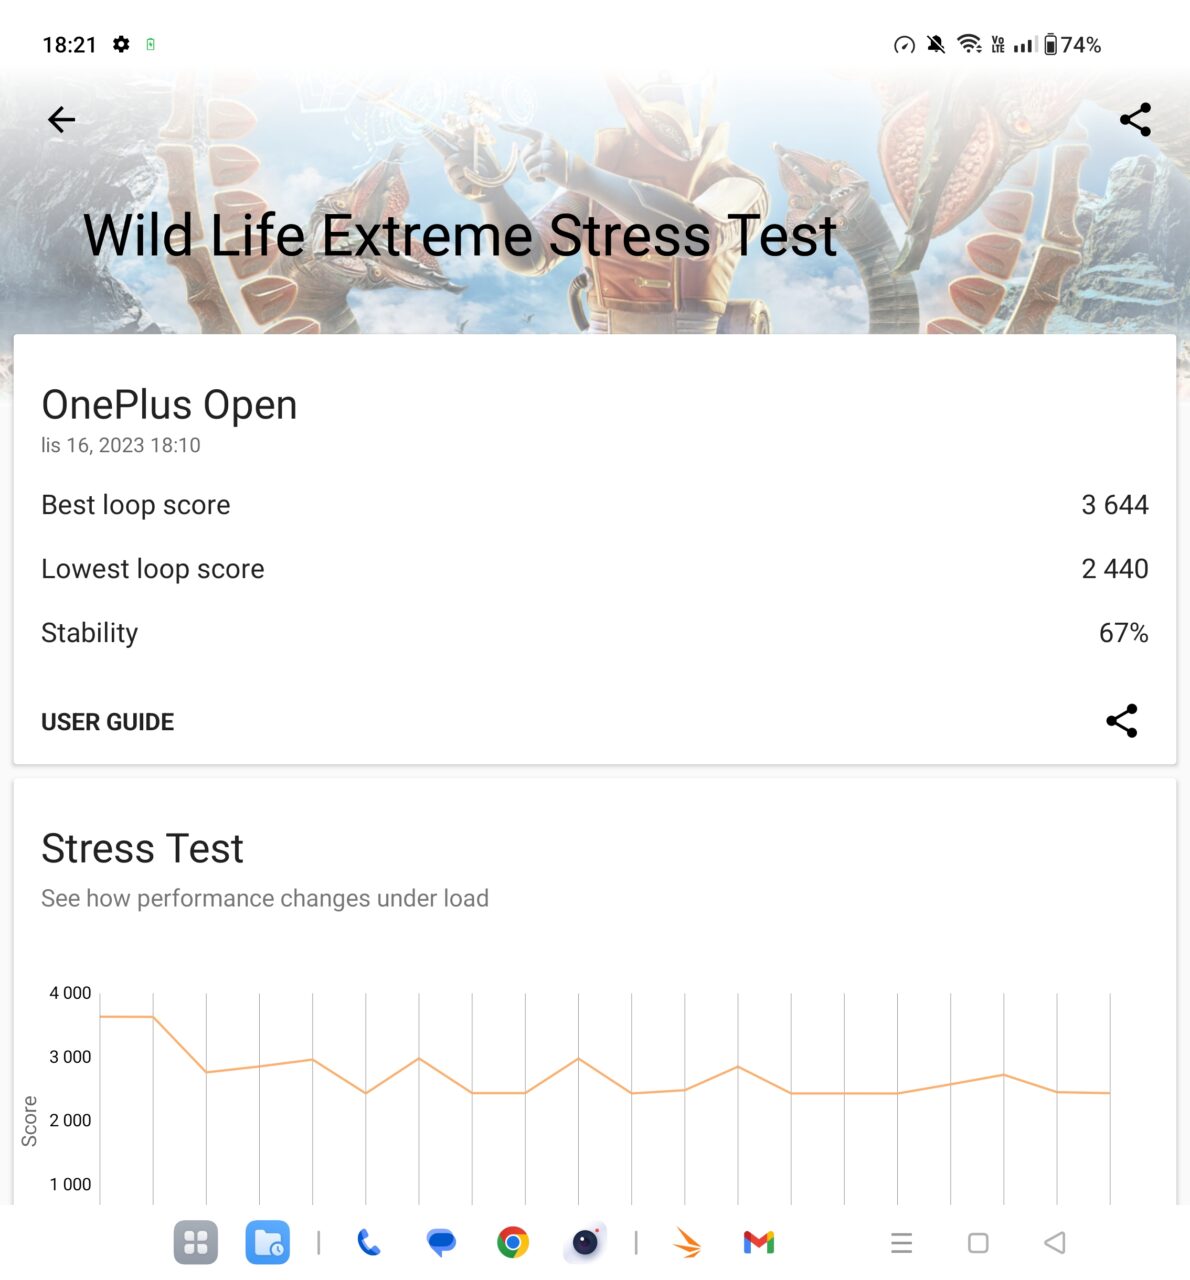  recenzja oneplus open, 3dmark stress test